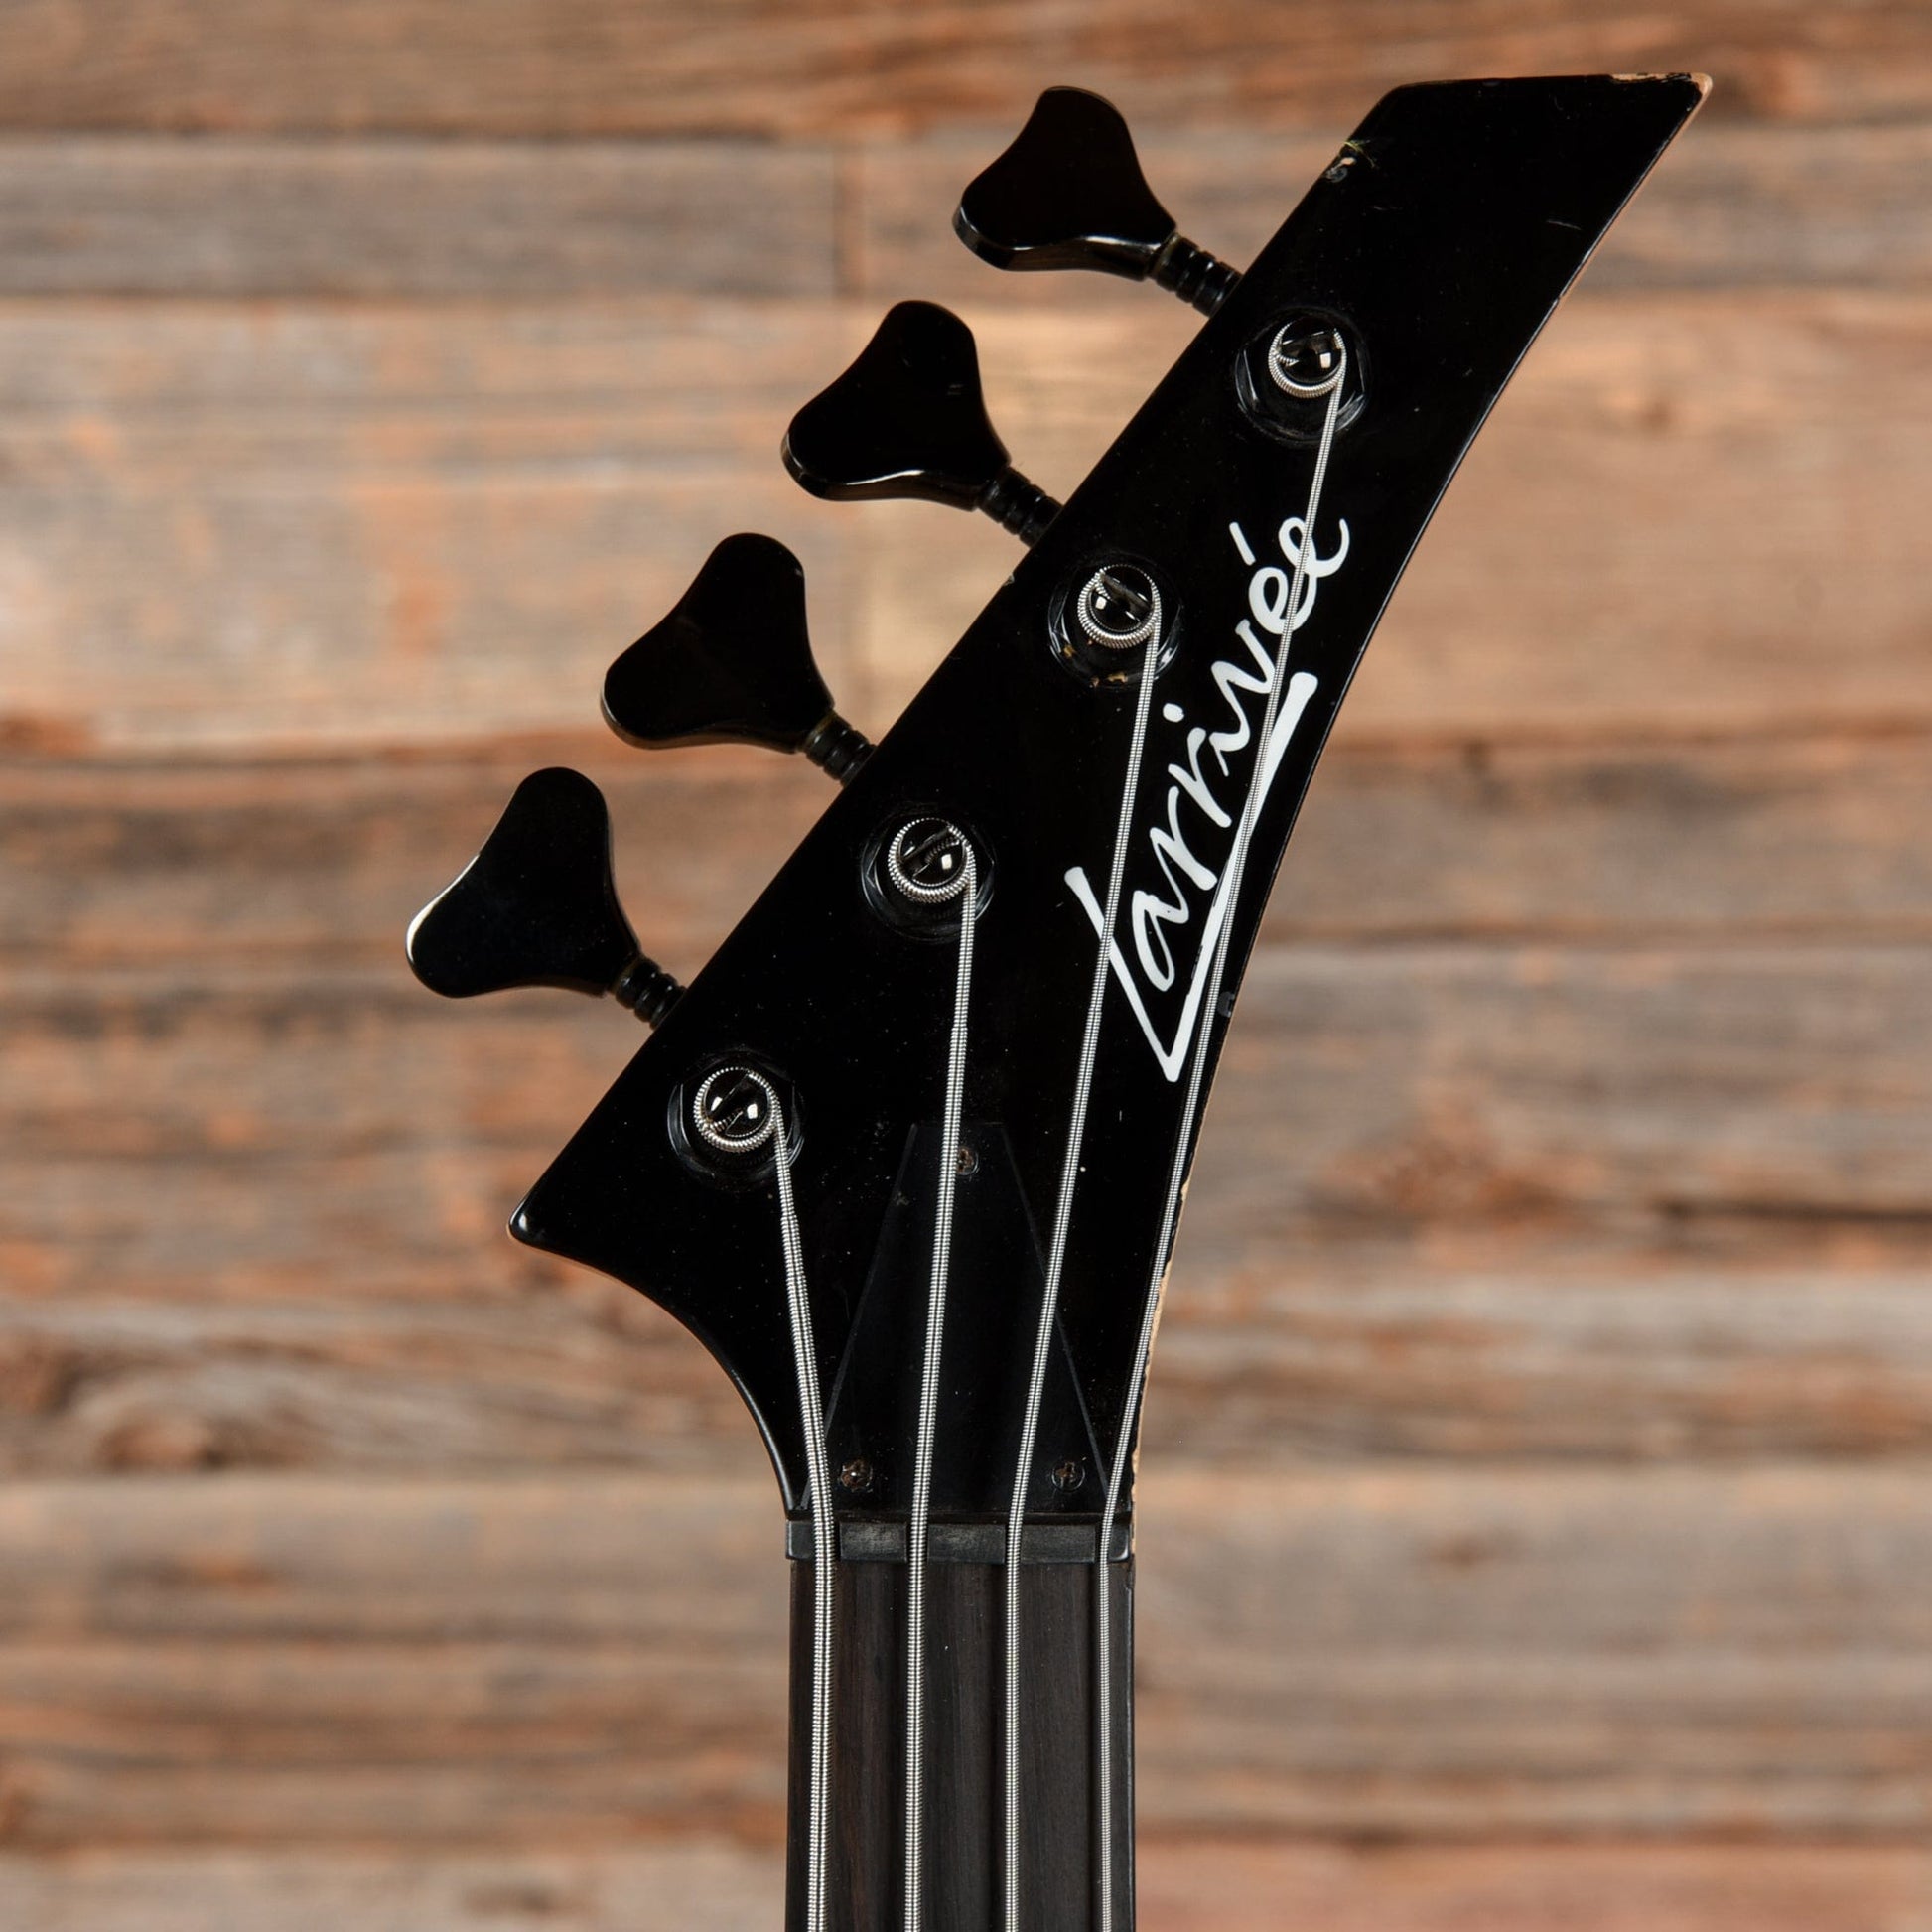 Larrivee LB-2 Black 1980s Bass Guitars / 4-String